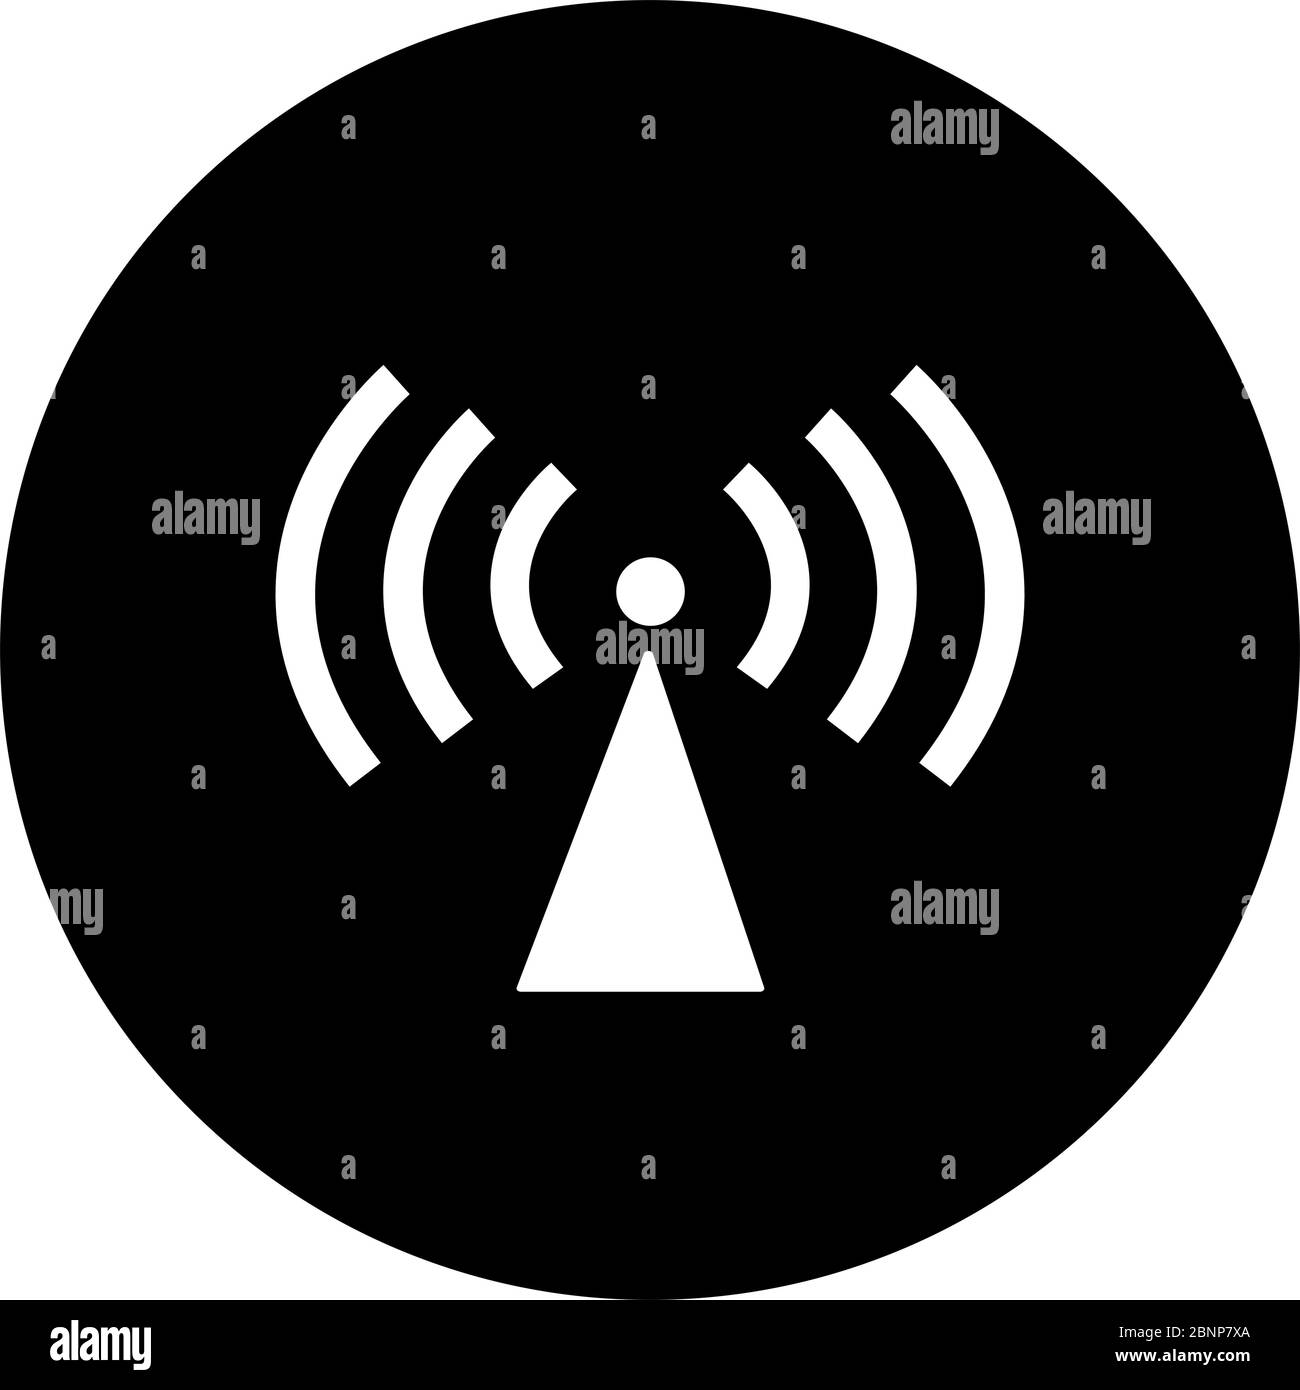 Non ionizing radiation round icon vector illustration. Warning caution symbol. Black, white. Stock Vector